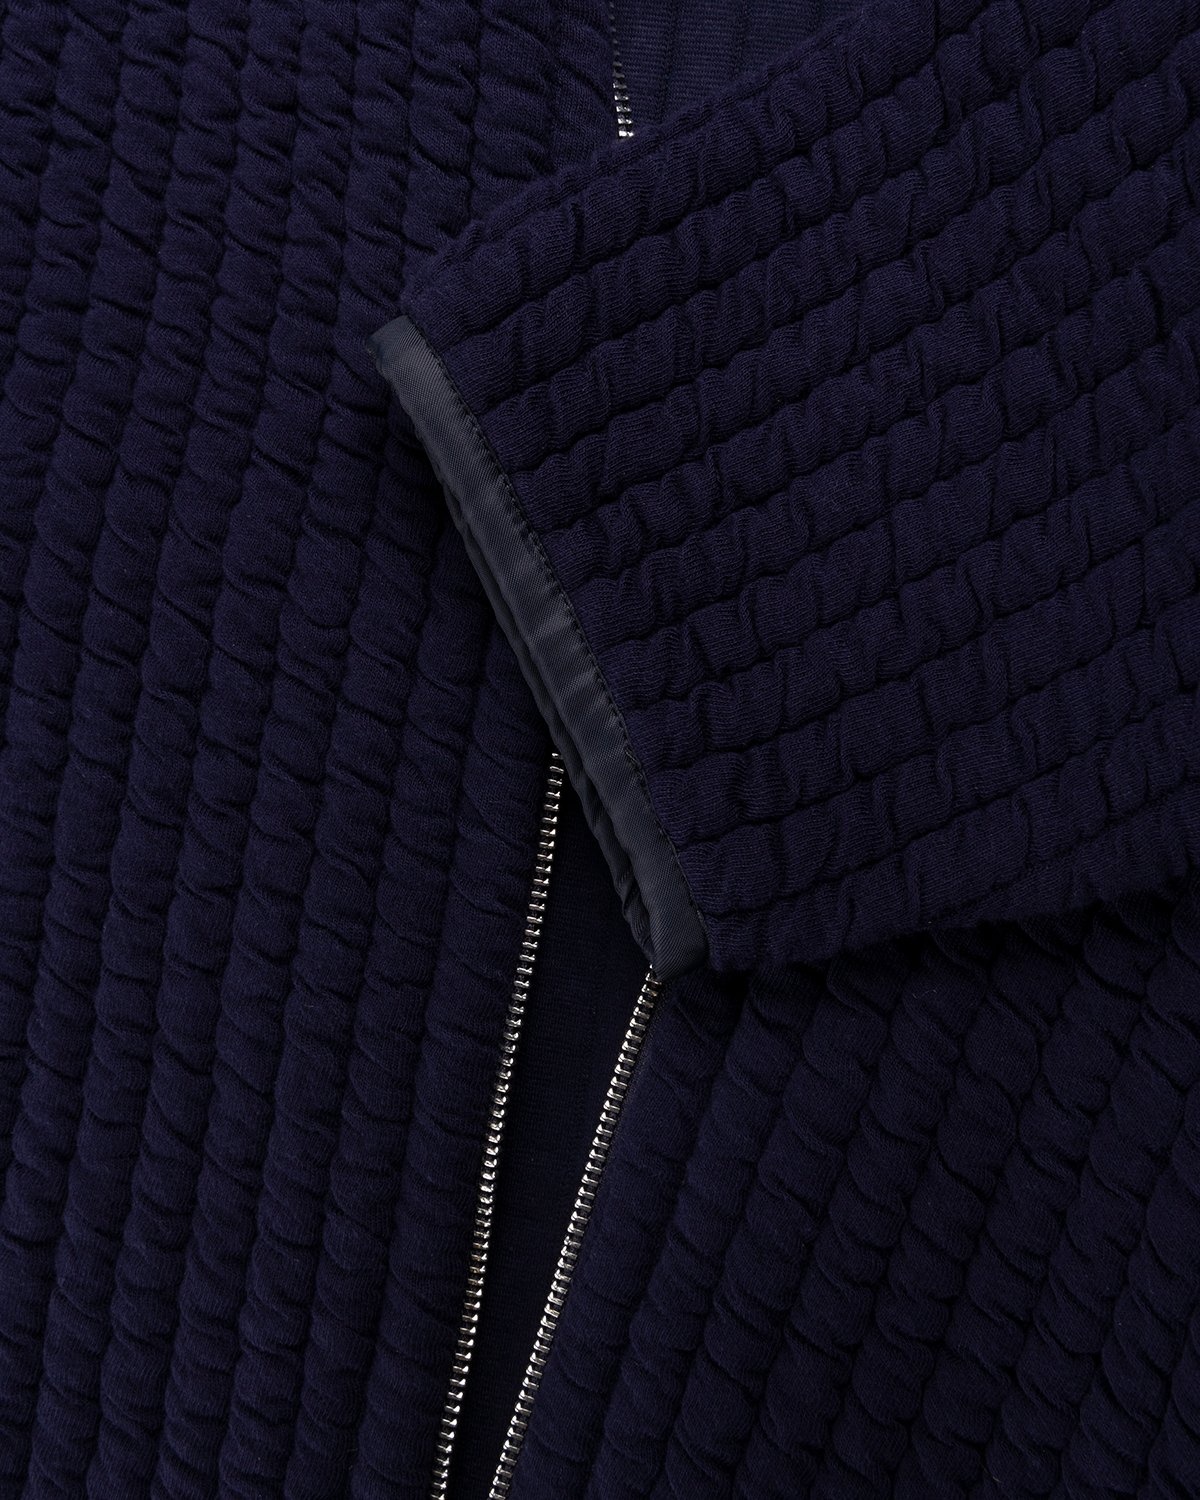 Jil Sander – Knitted Bomber Navy - Outerwear - Blue - Image 4